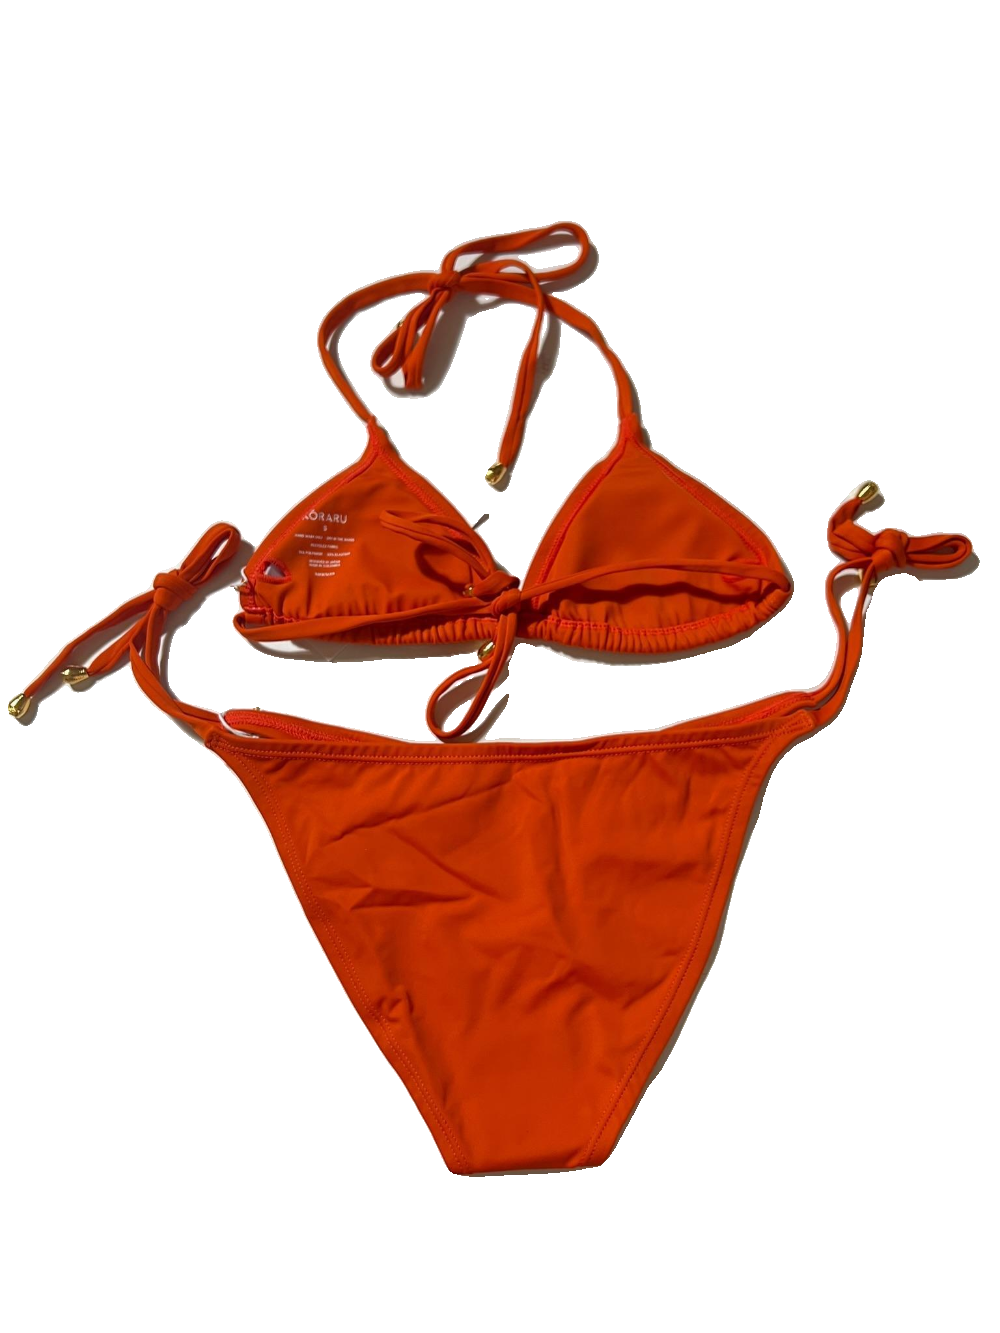 Koraru- Orange Bikini NEW WITH TAGS!